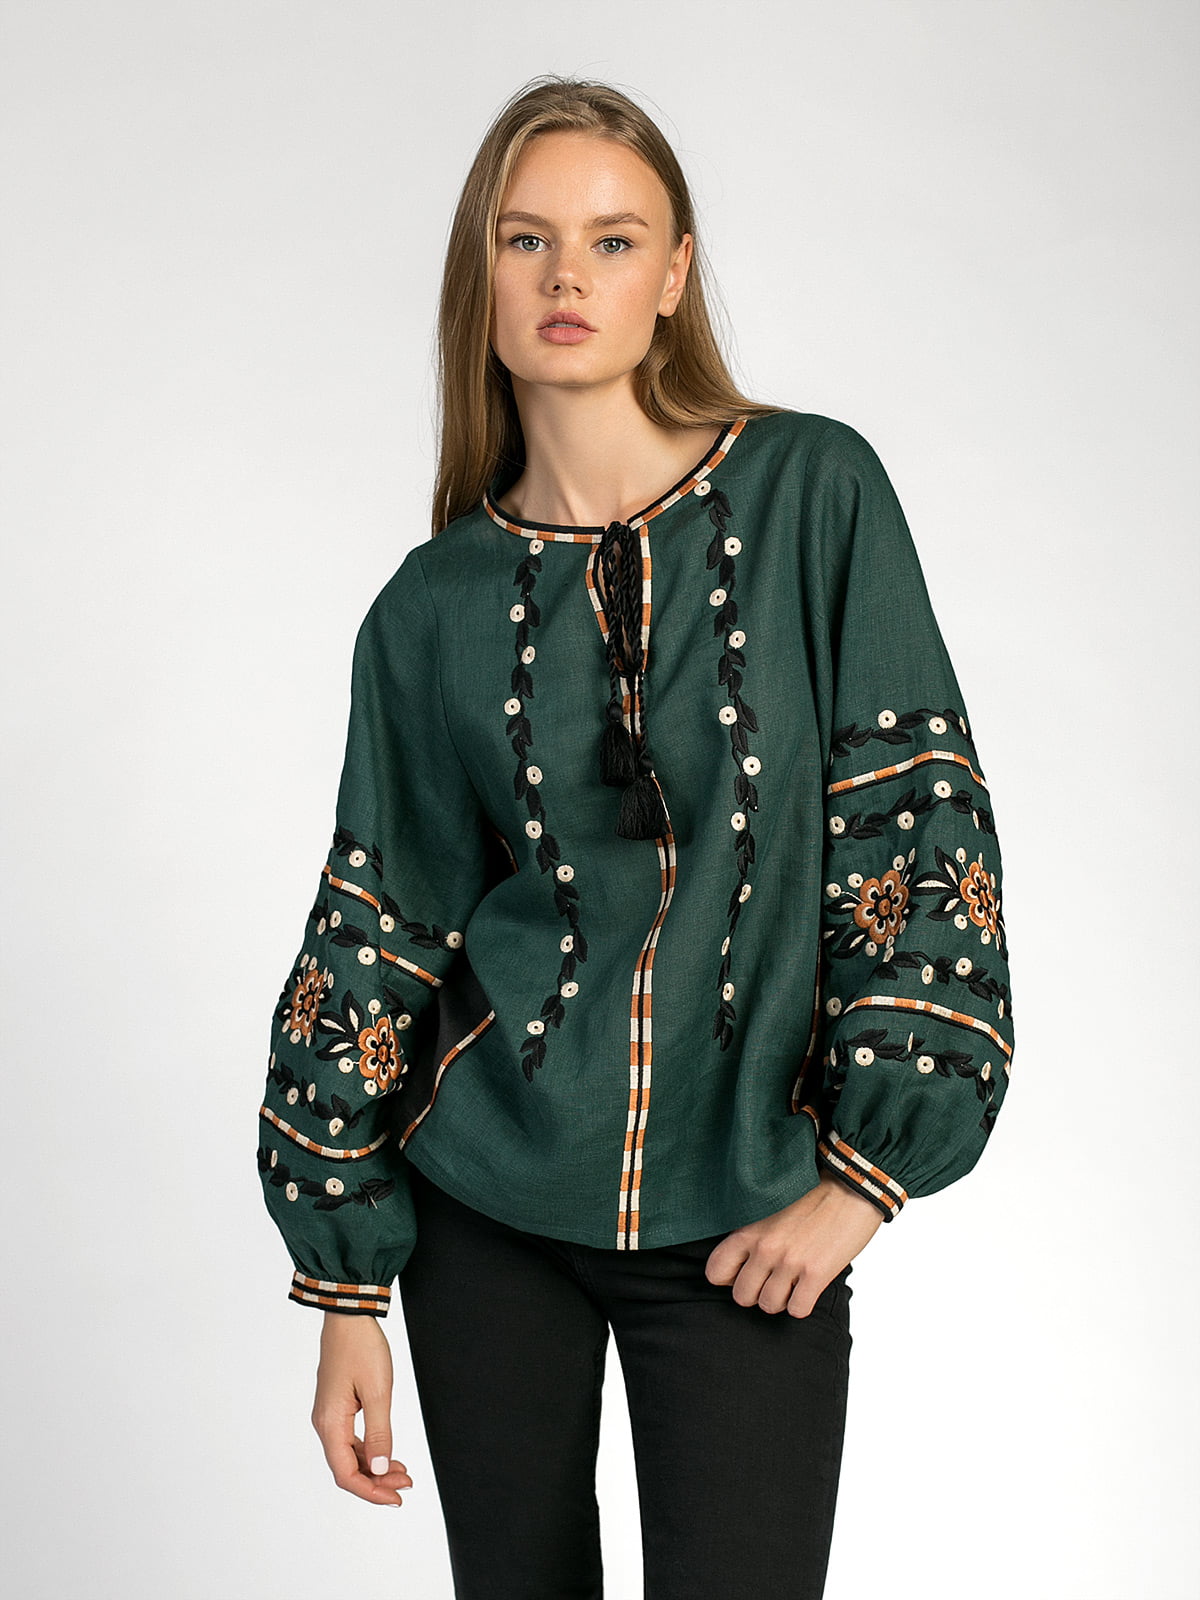 Embroidered shirt in dark-green linen Hvoya - photo 1